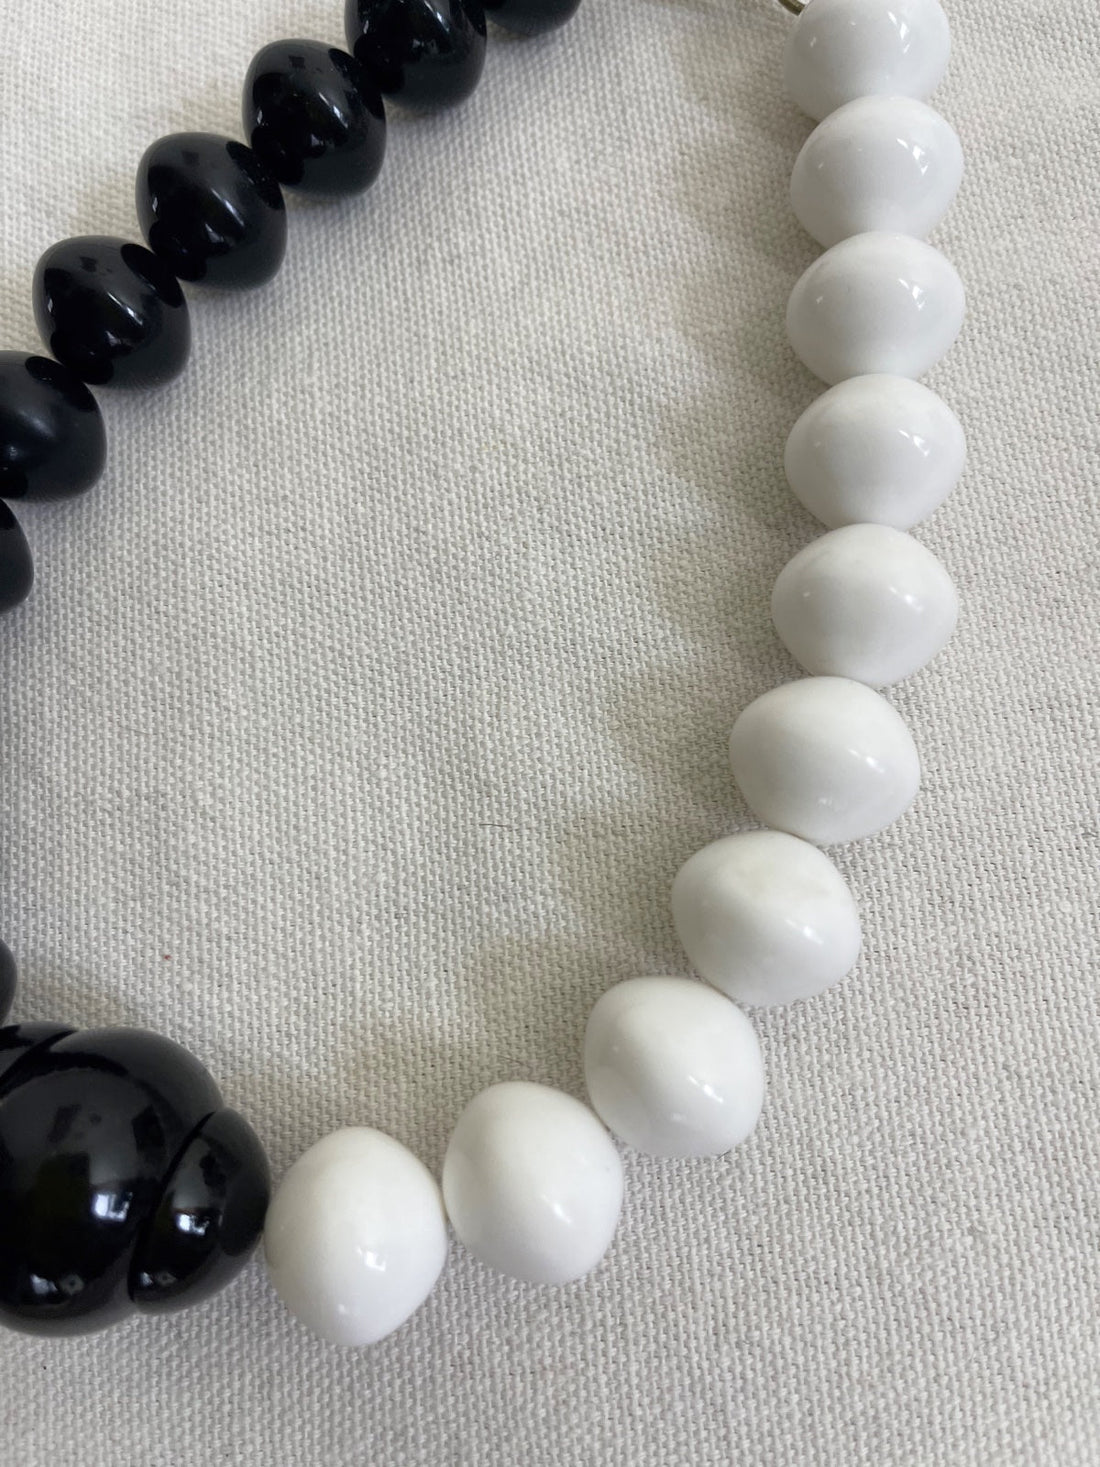 60's Black & White Beaded Necklace-closiTherapi | vinTage